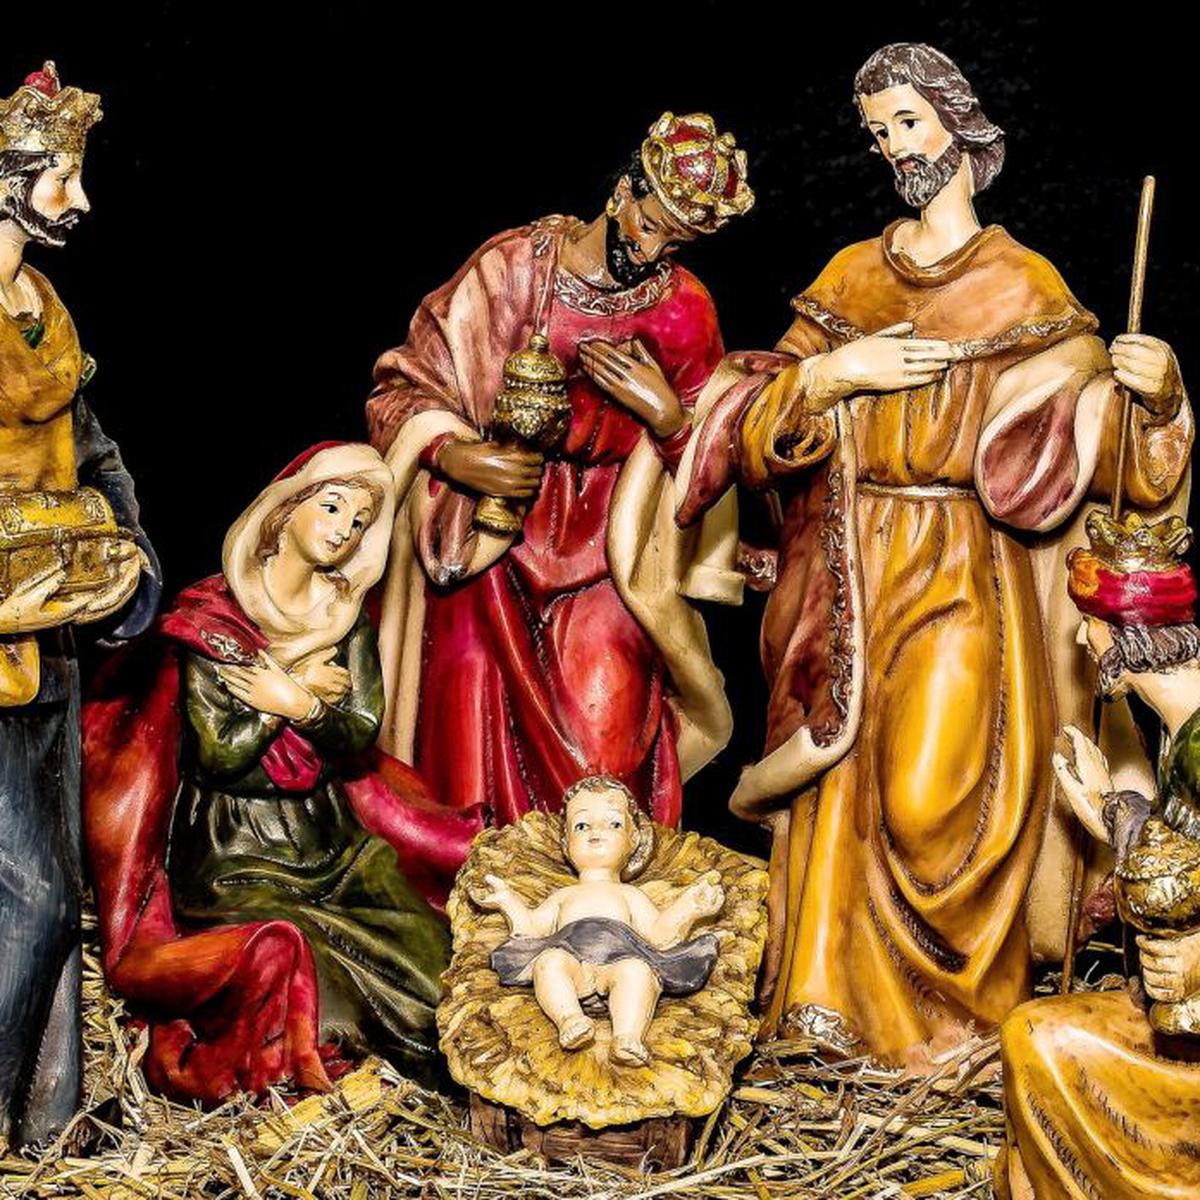 El Belén, la historia de la Navidad